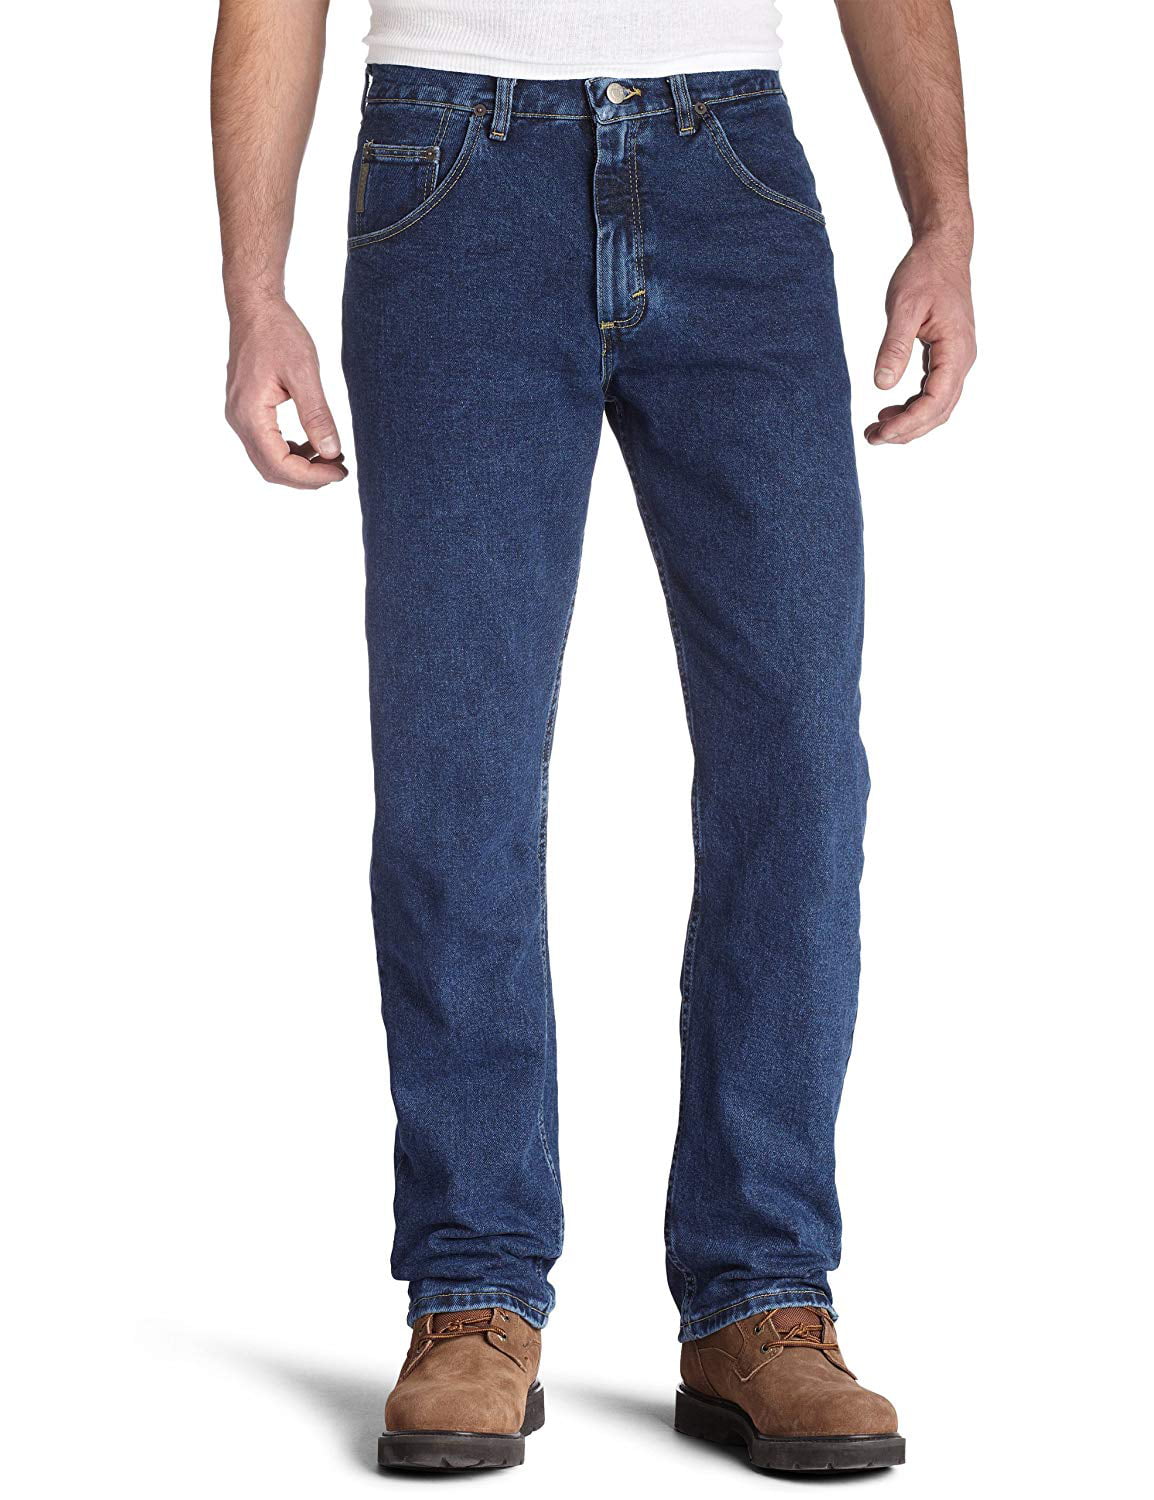 Wrangler Men's Regular Fit Jeans, Dark Denim, 33W x 34L | Walmart Canada